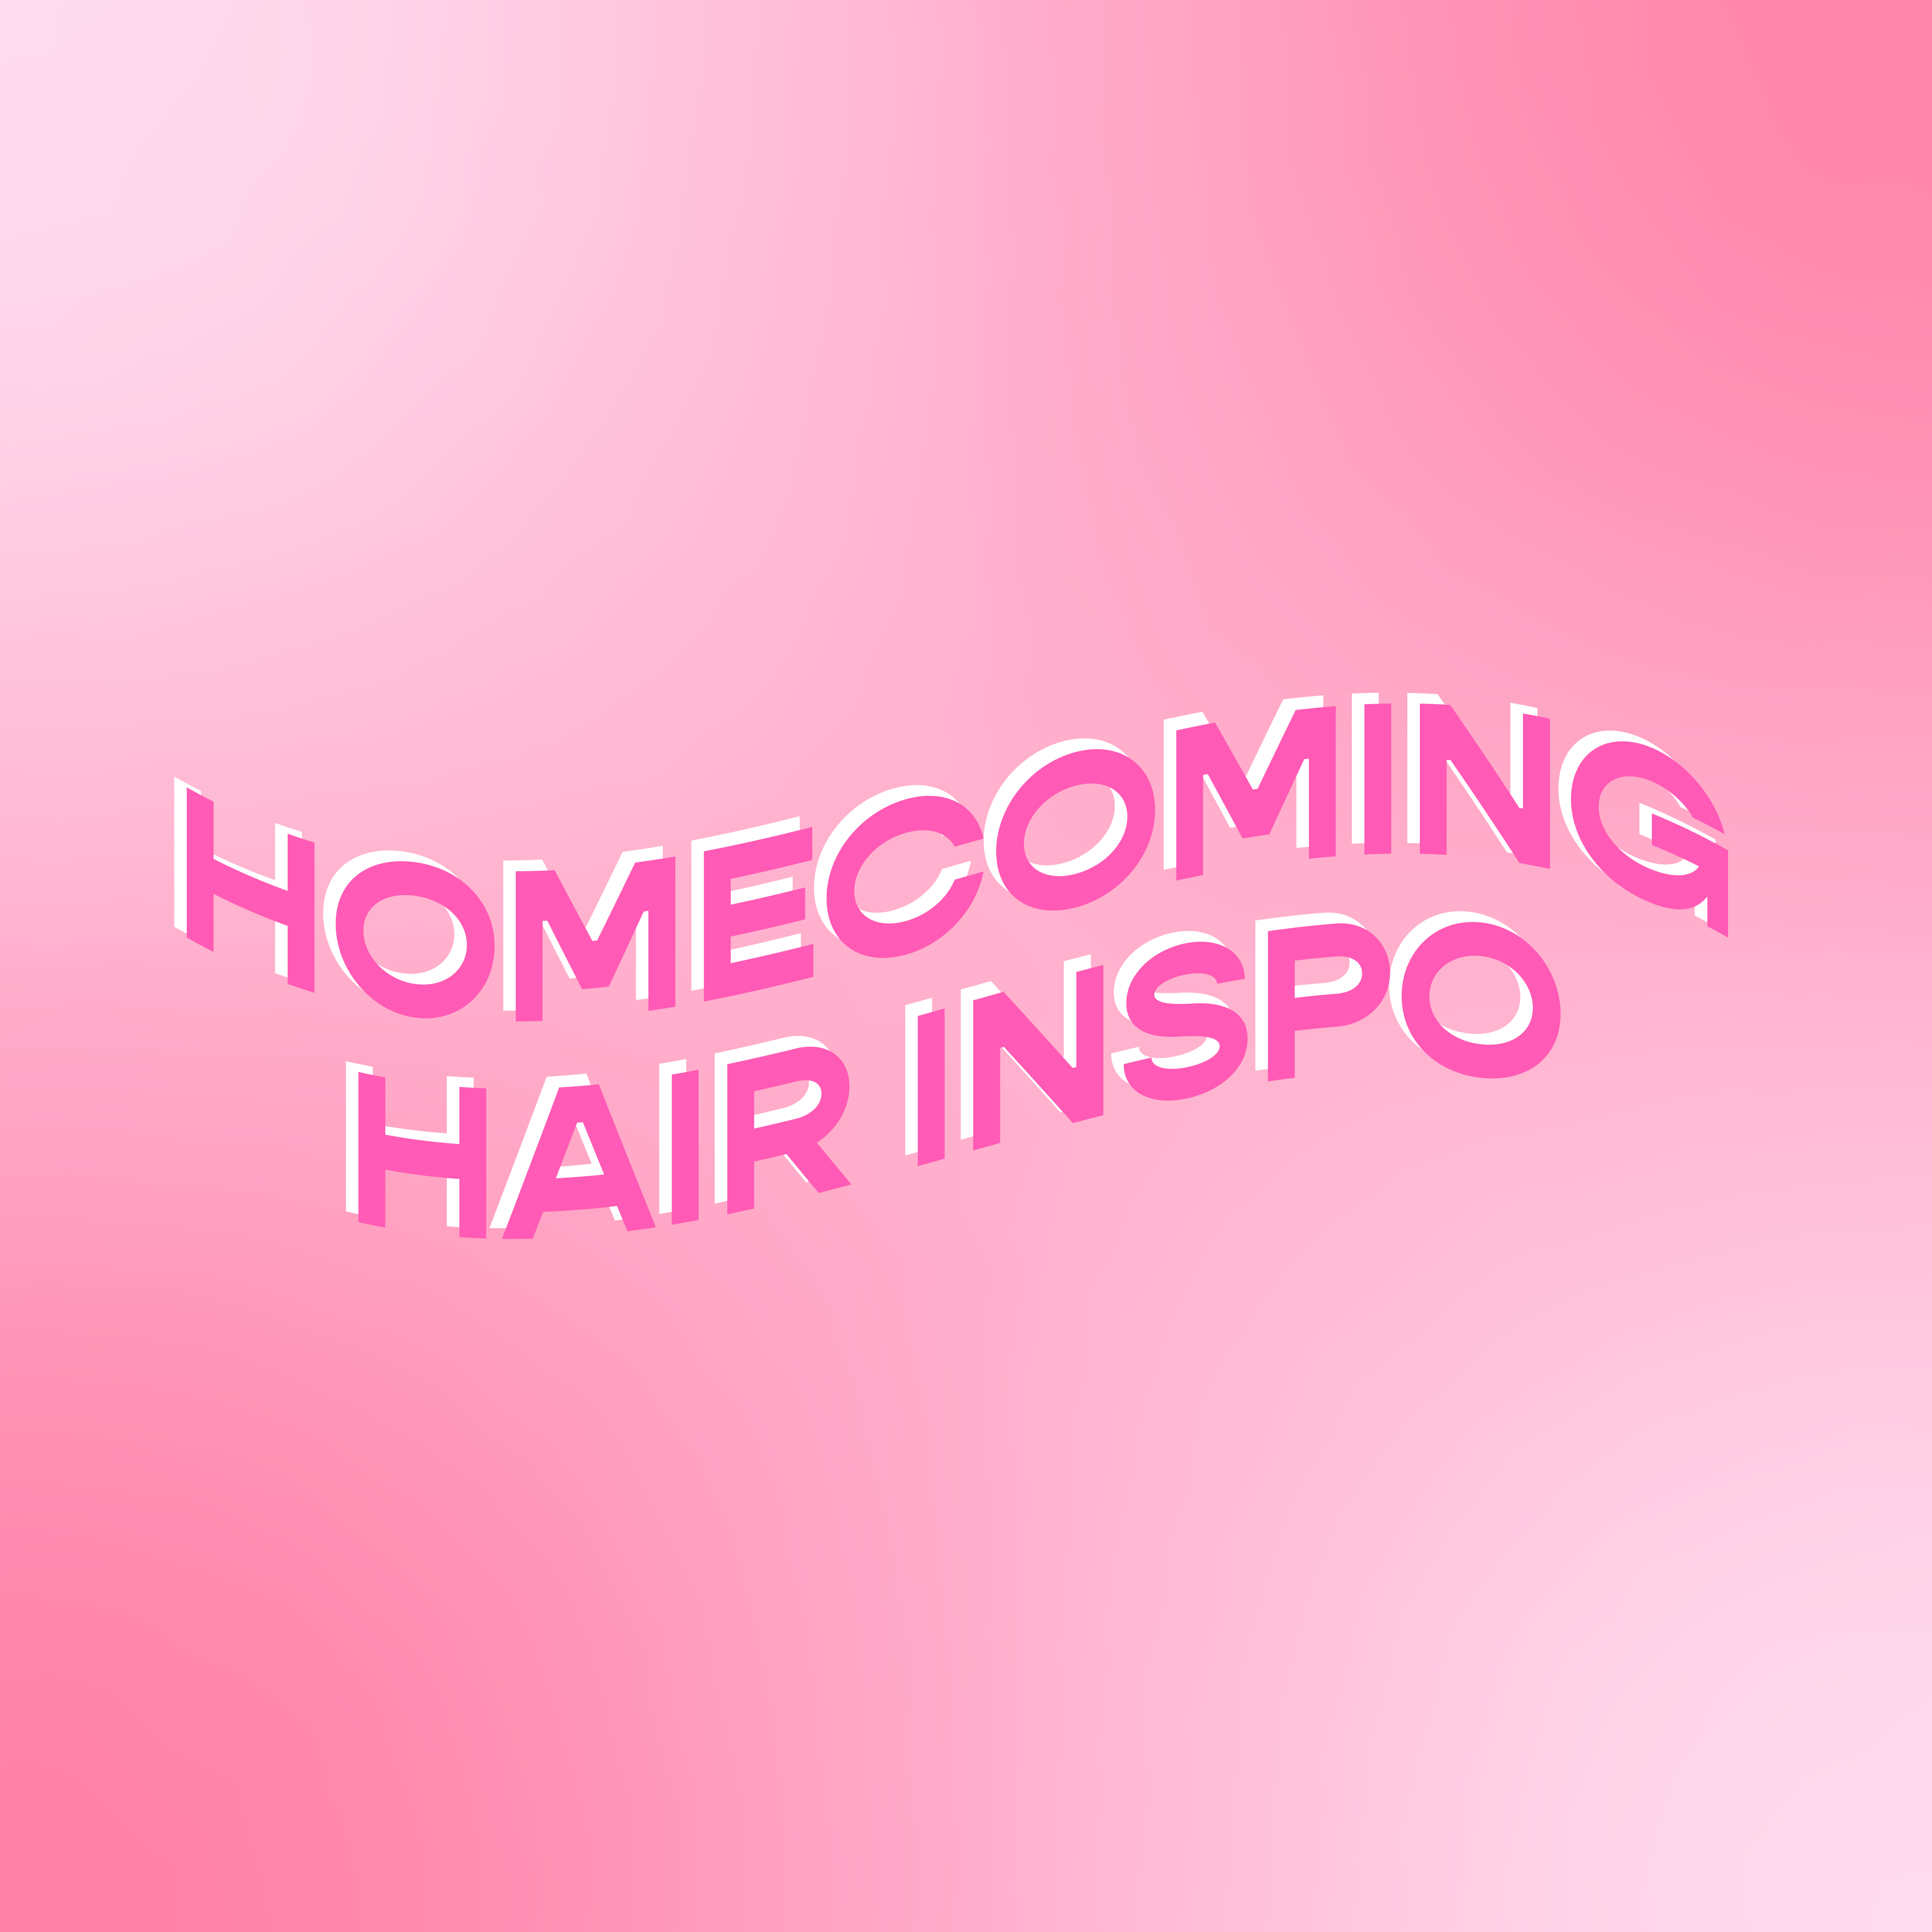 Homecoming Hair Inspo